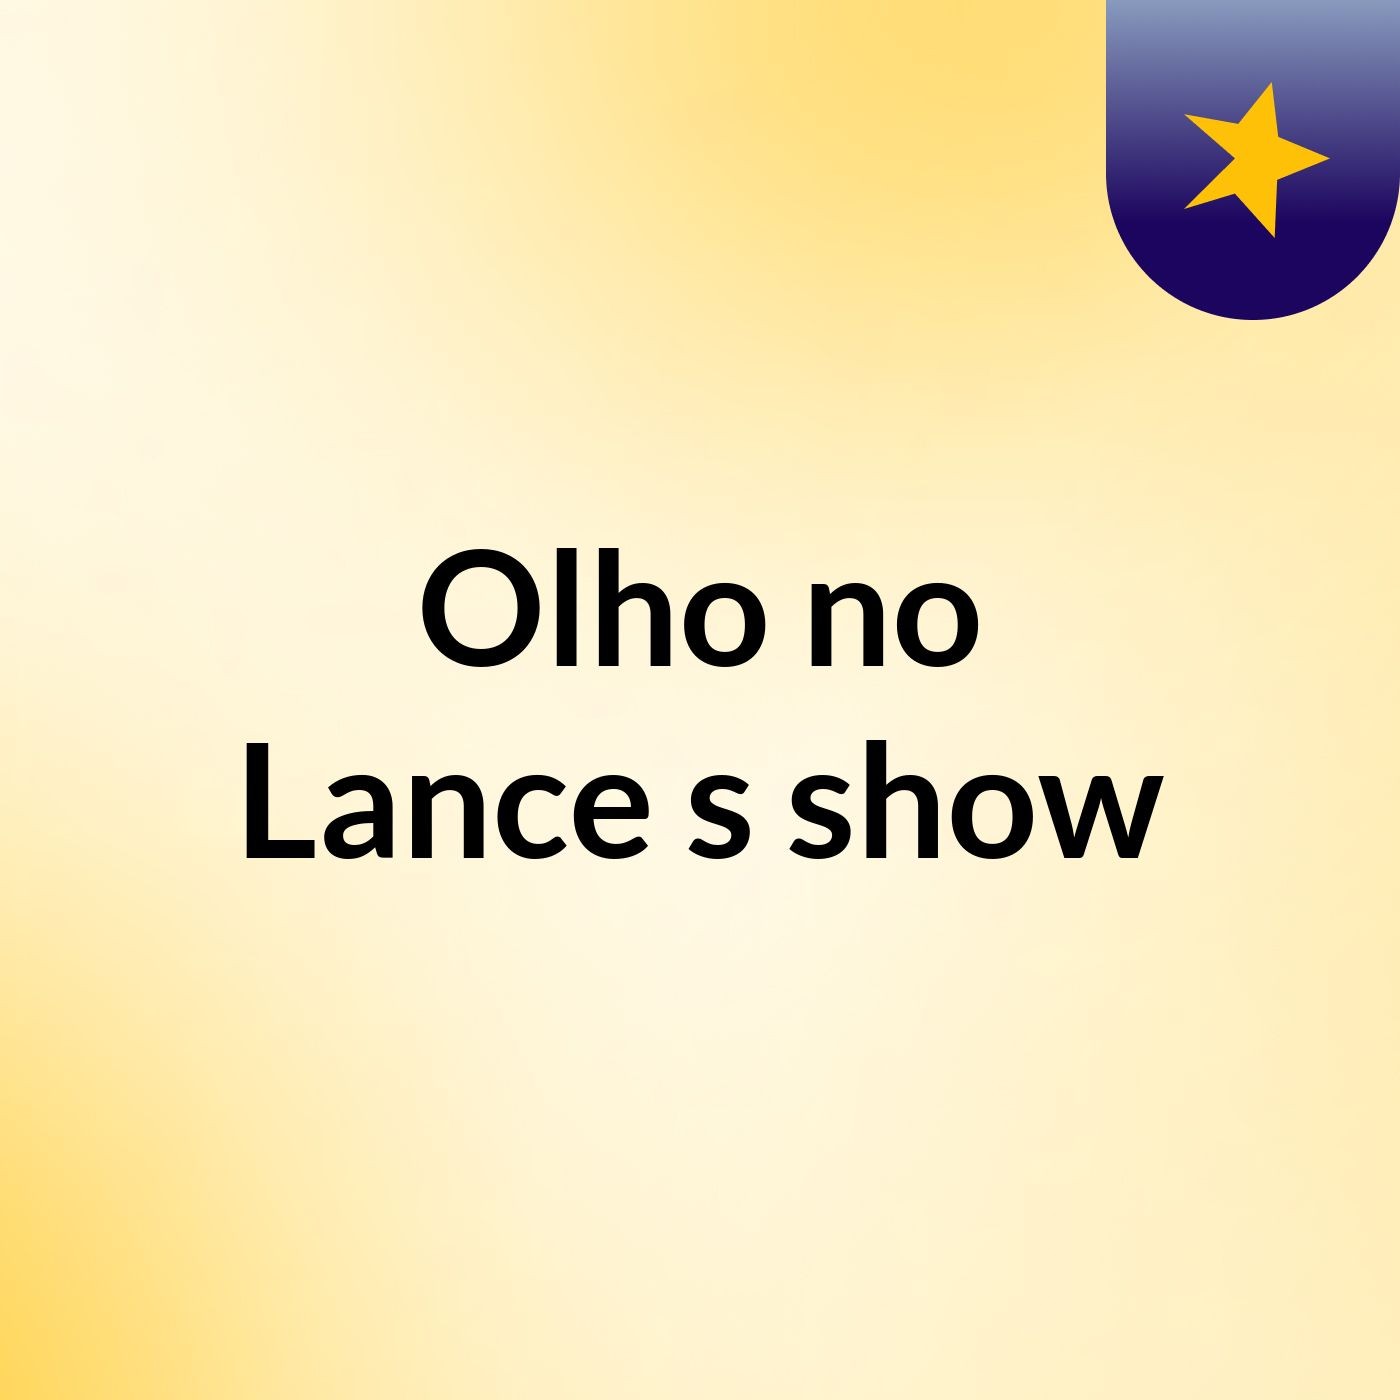 Olho no Lance's show